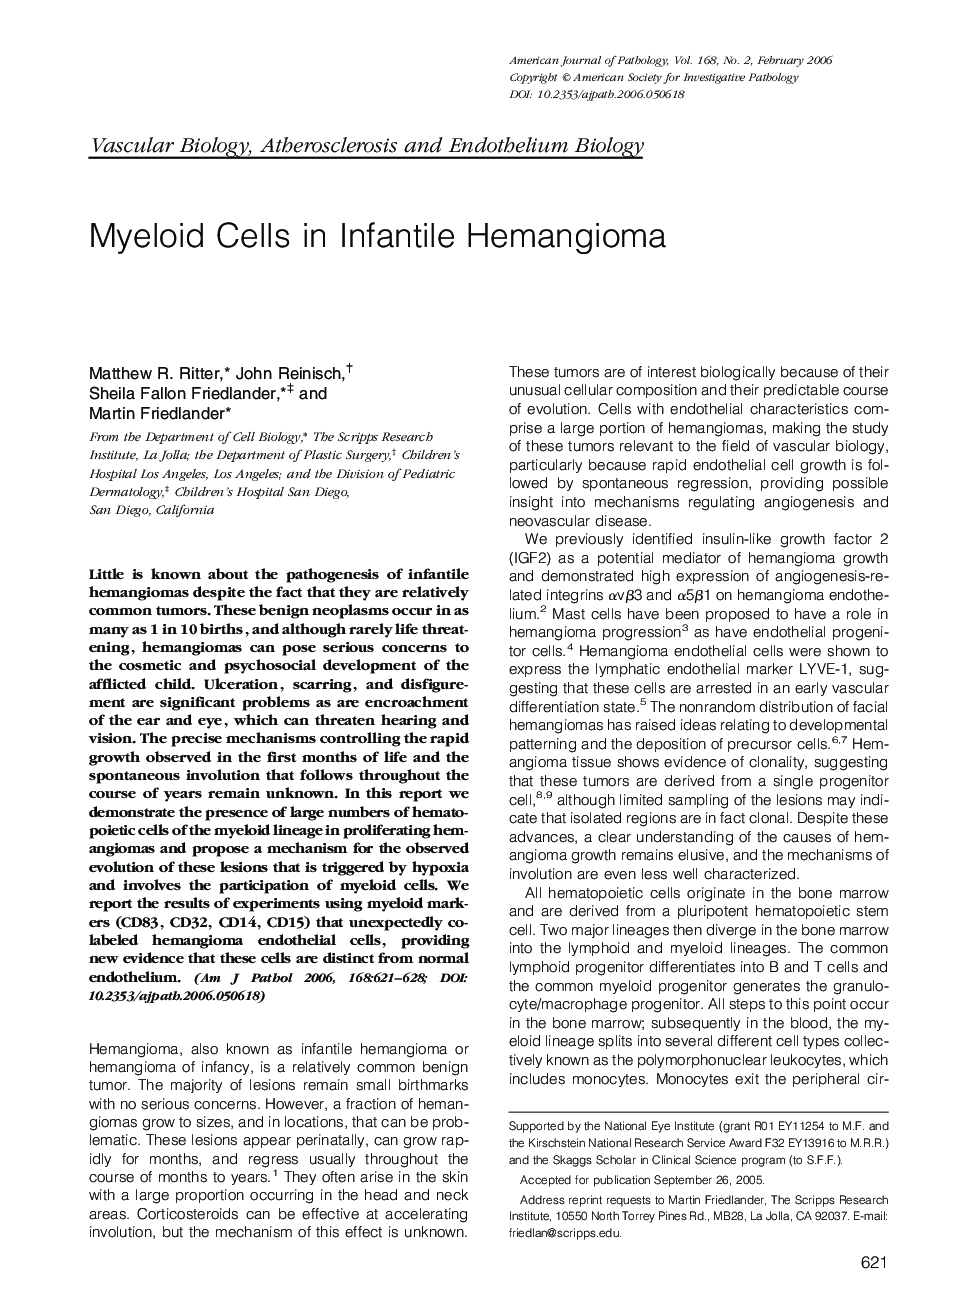 Myeloid Cells in Infantile Hemangioma